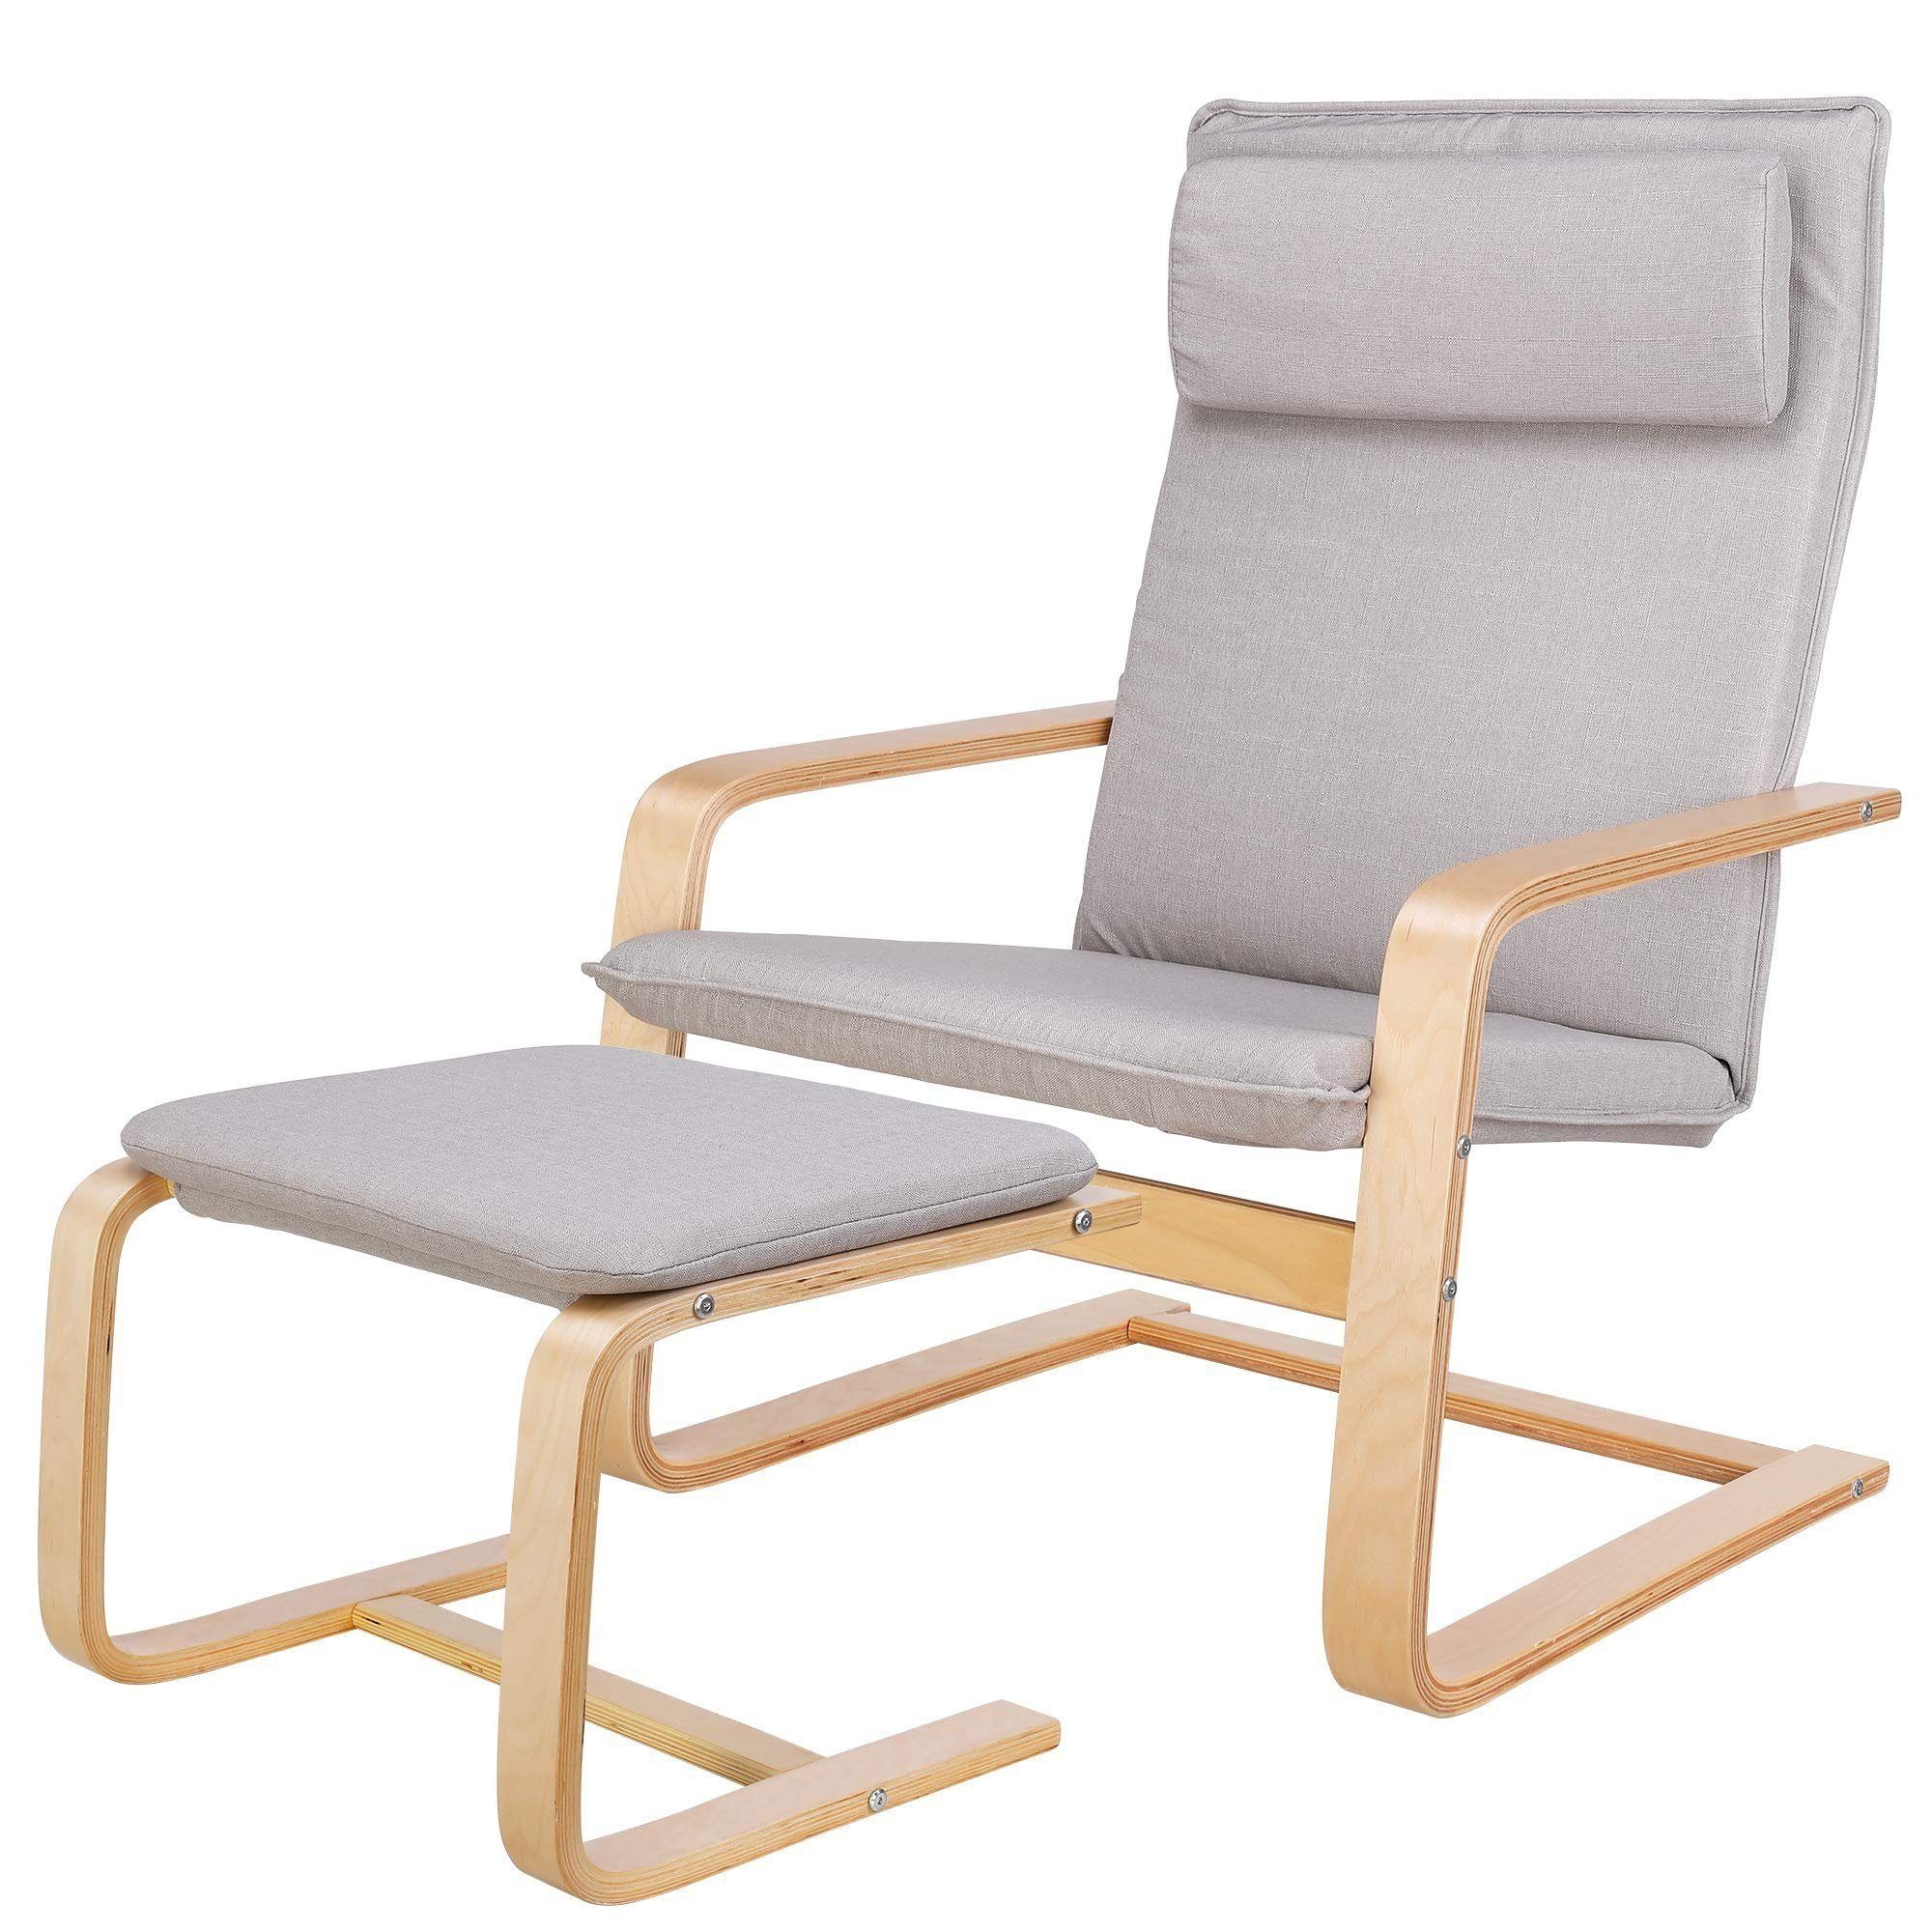 Daskoo Relaxsessel Relaxstuhl mit Fußhocker und Armlehne,66.5x69x96.5 cm (Relaxsessel mit hocker), Sessel Armlehnensessel aus Birkenholz Grau | Kindersessel